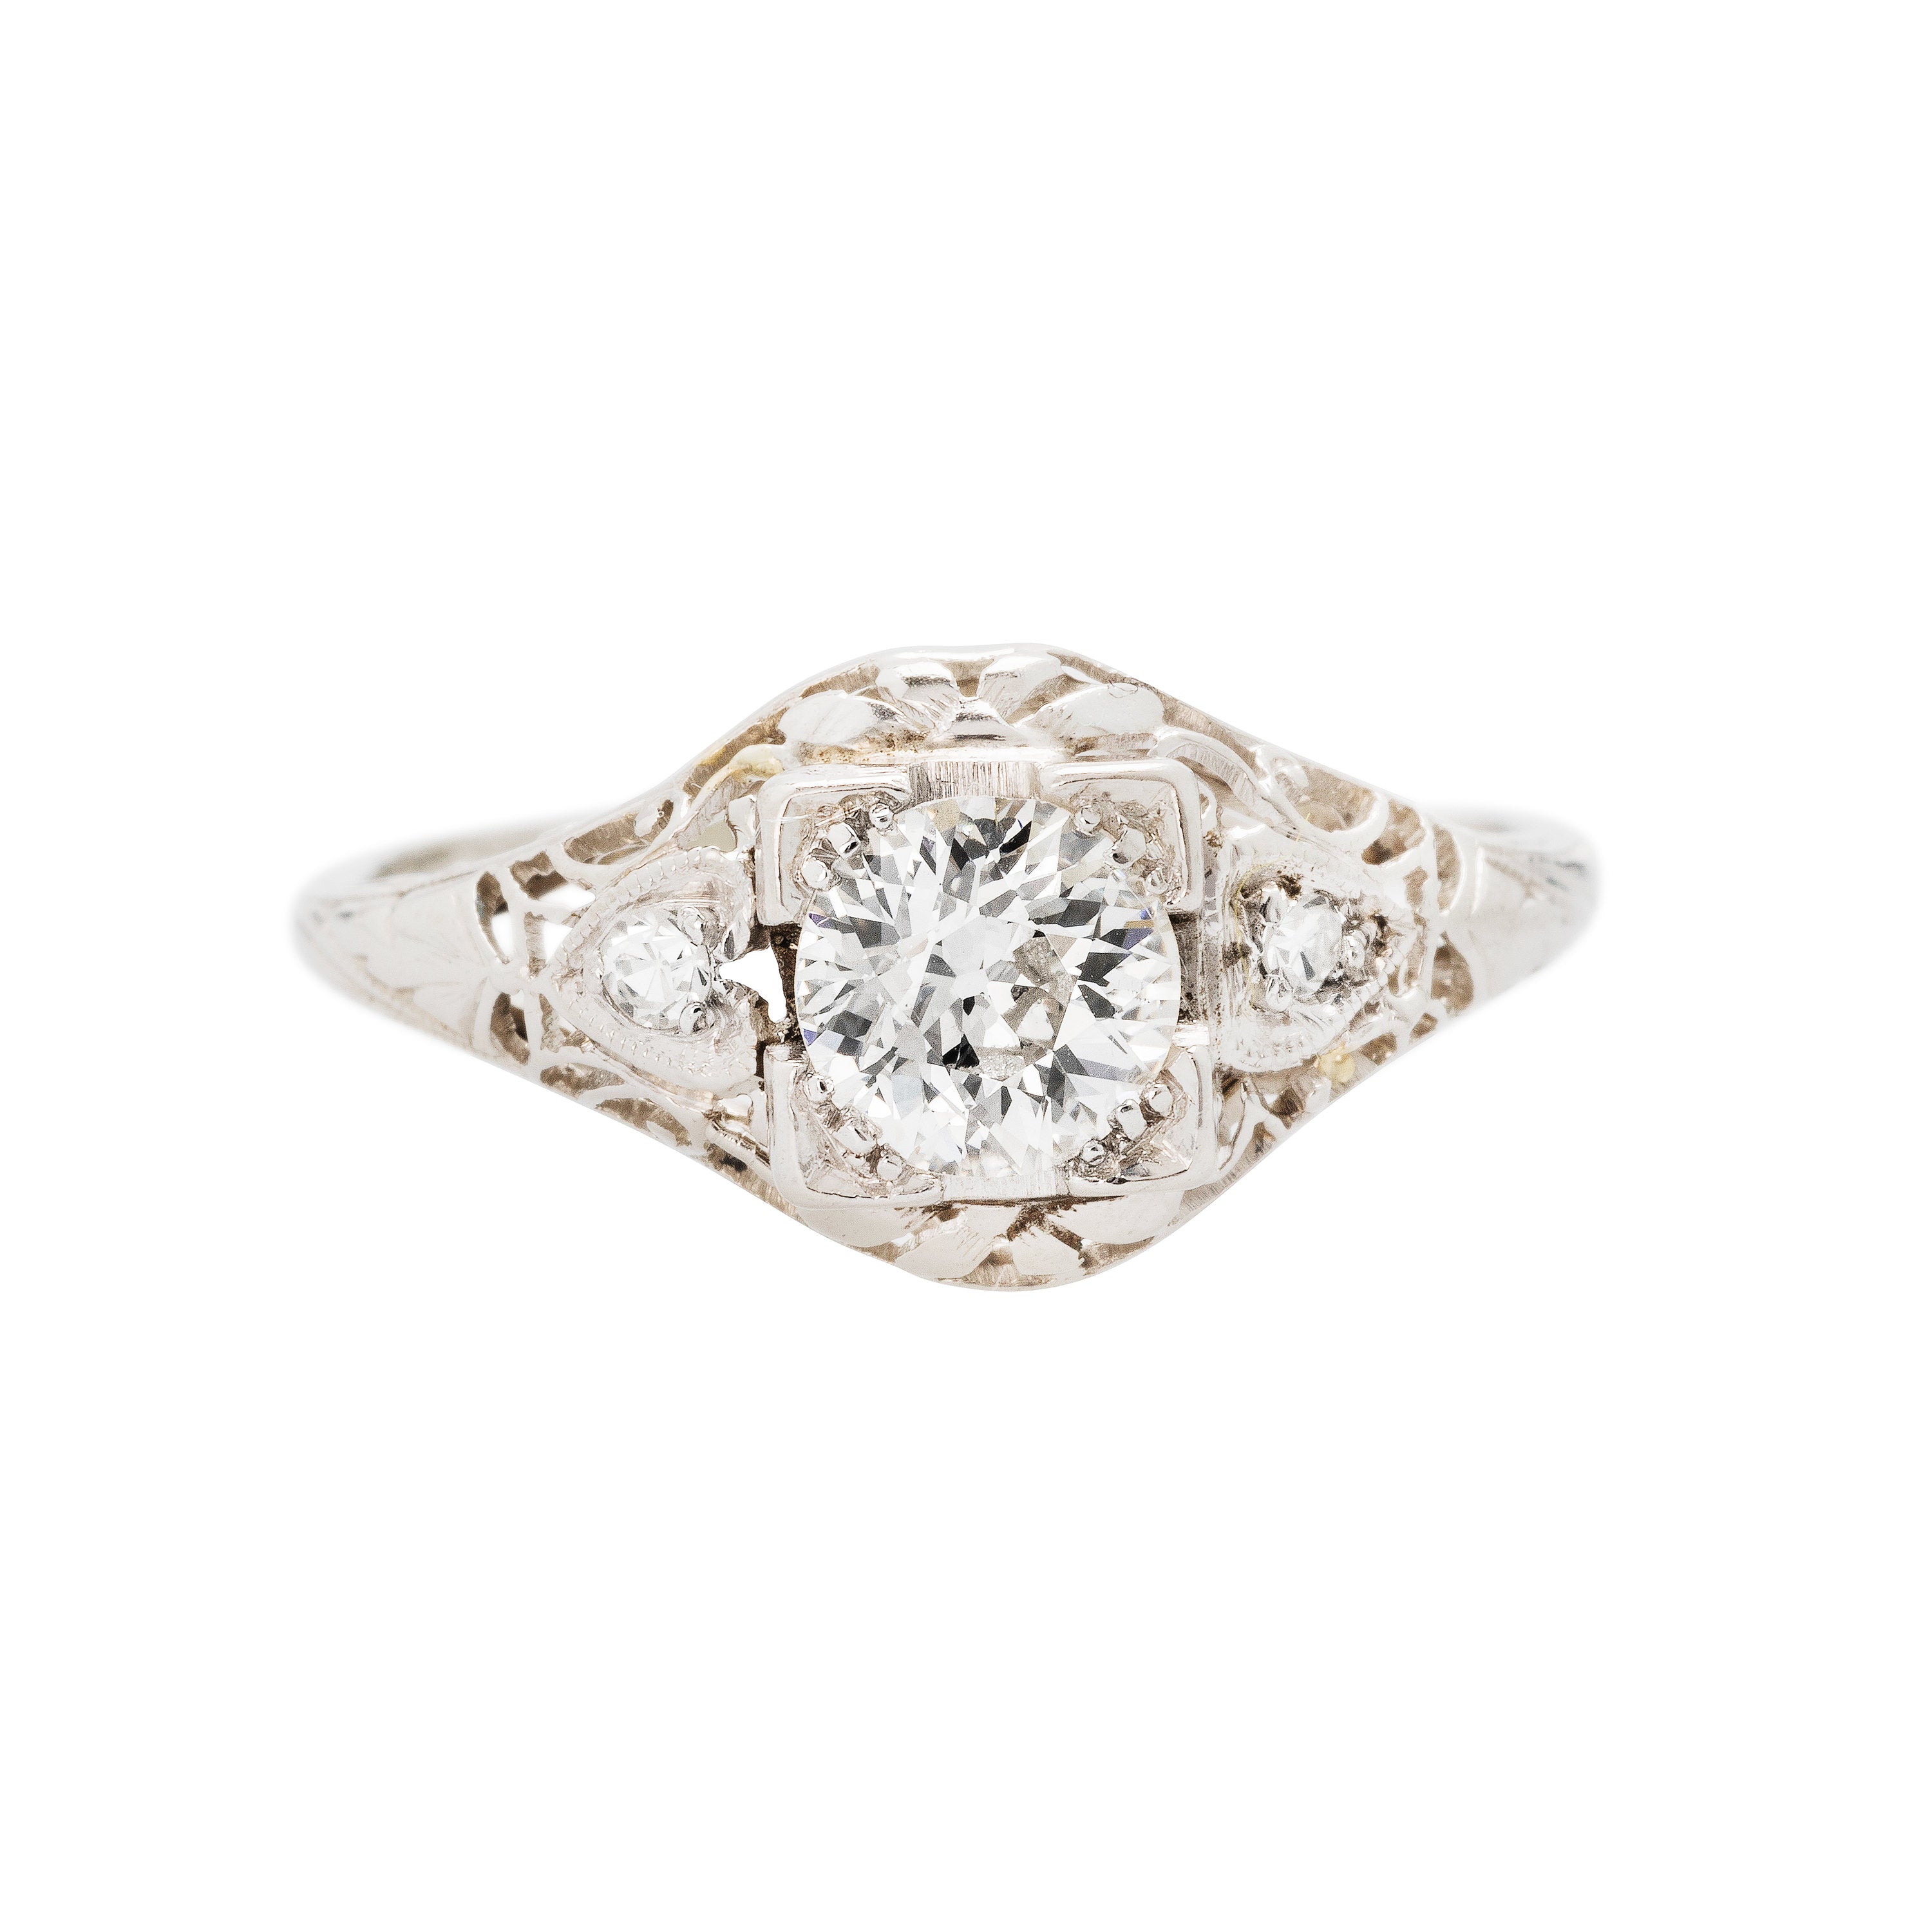 Alta Visa platinum and diamond engagement ring from the Art Deco era.